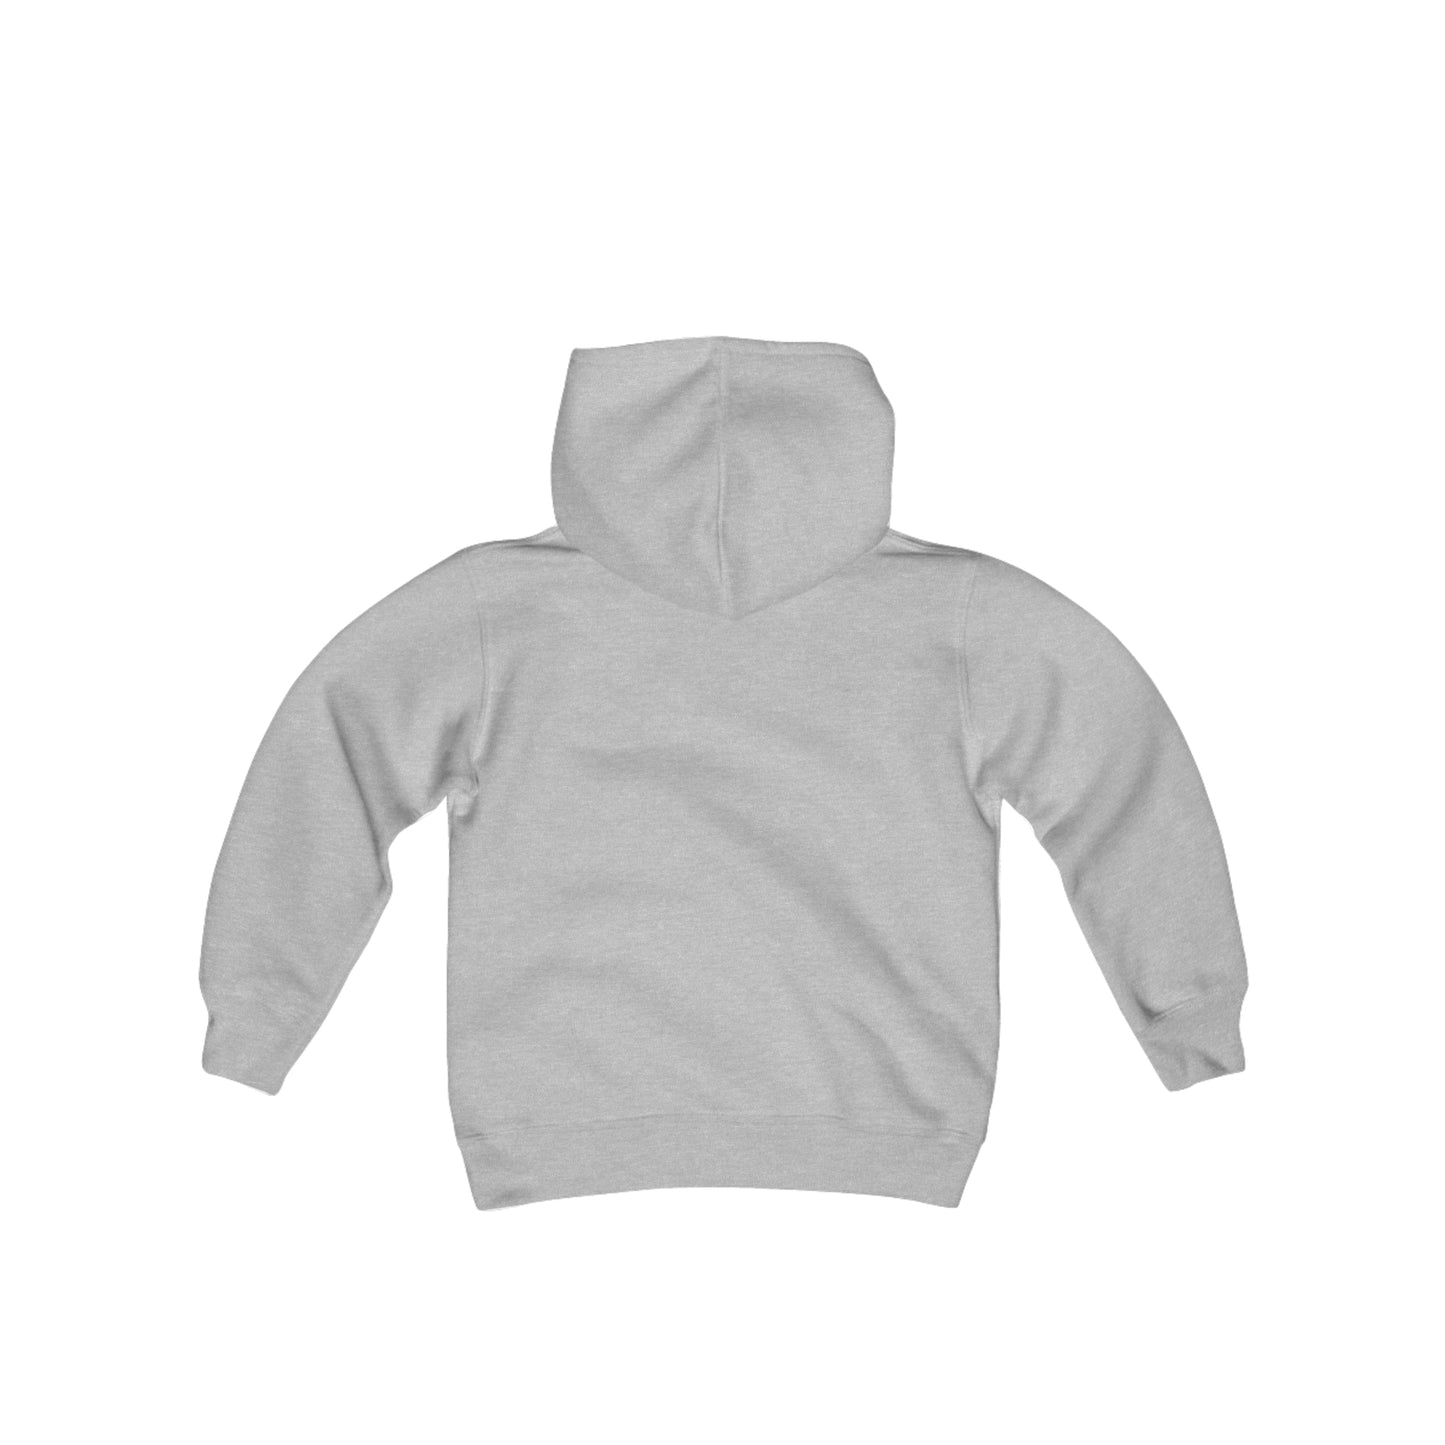 Youth Heavy Blend Hooded Sweatshirt - S2